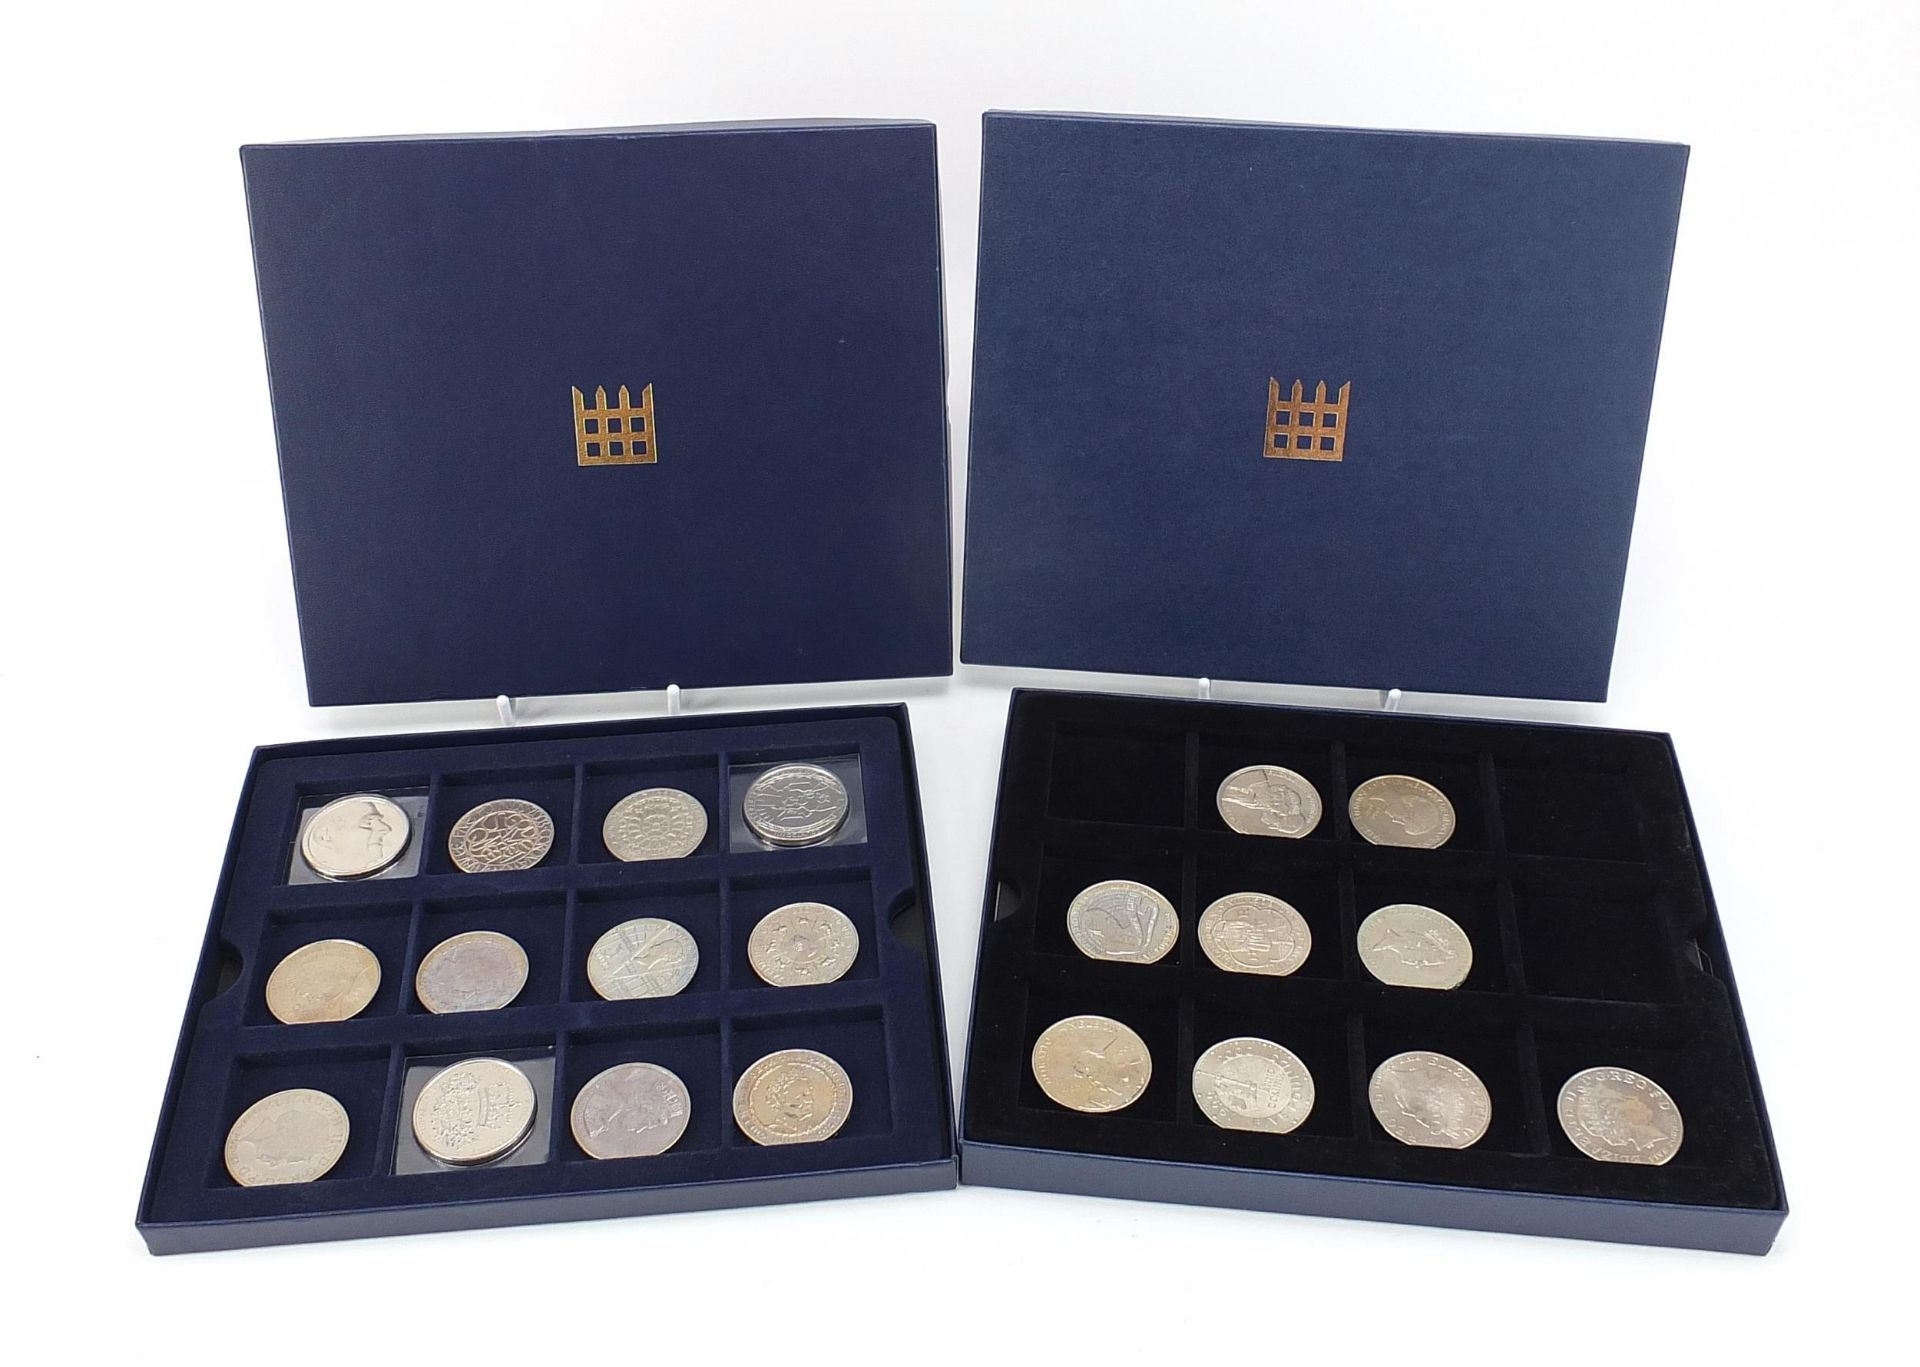 Twenty one United Kingdom commemorative five pound coins